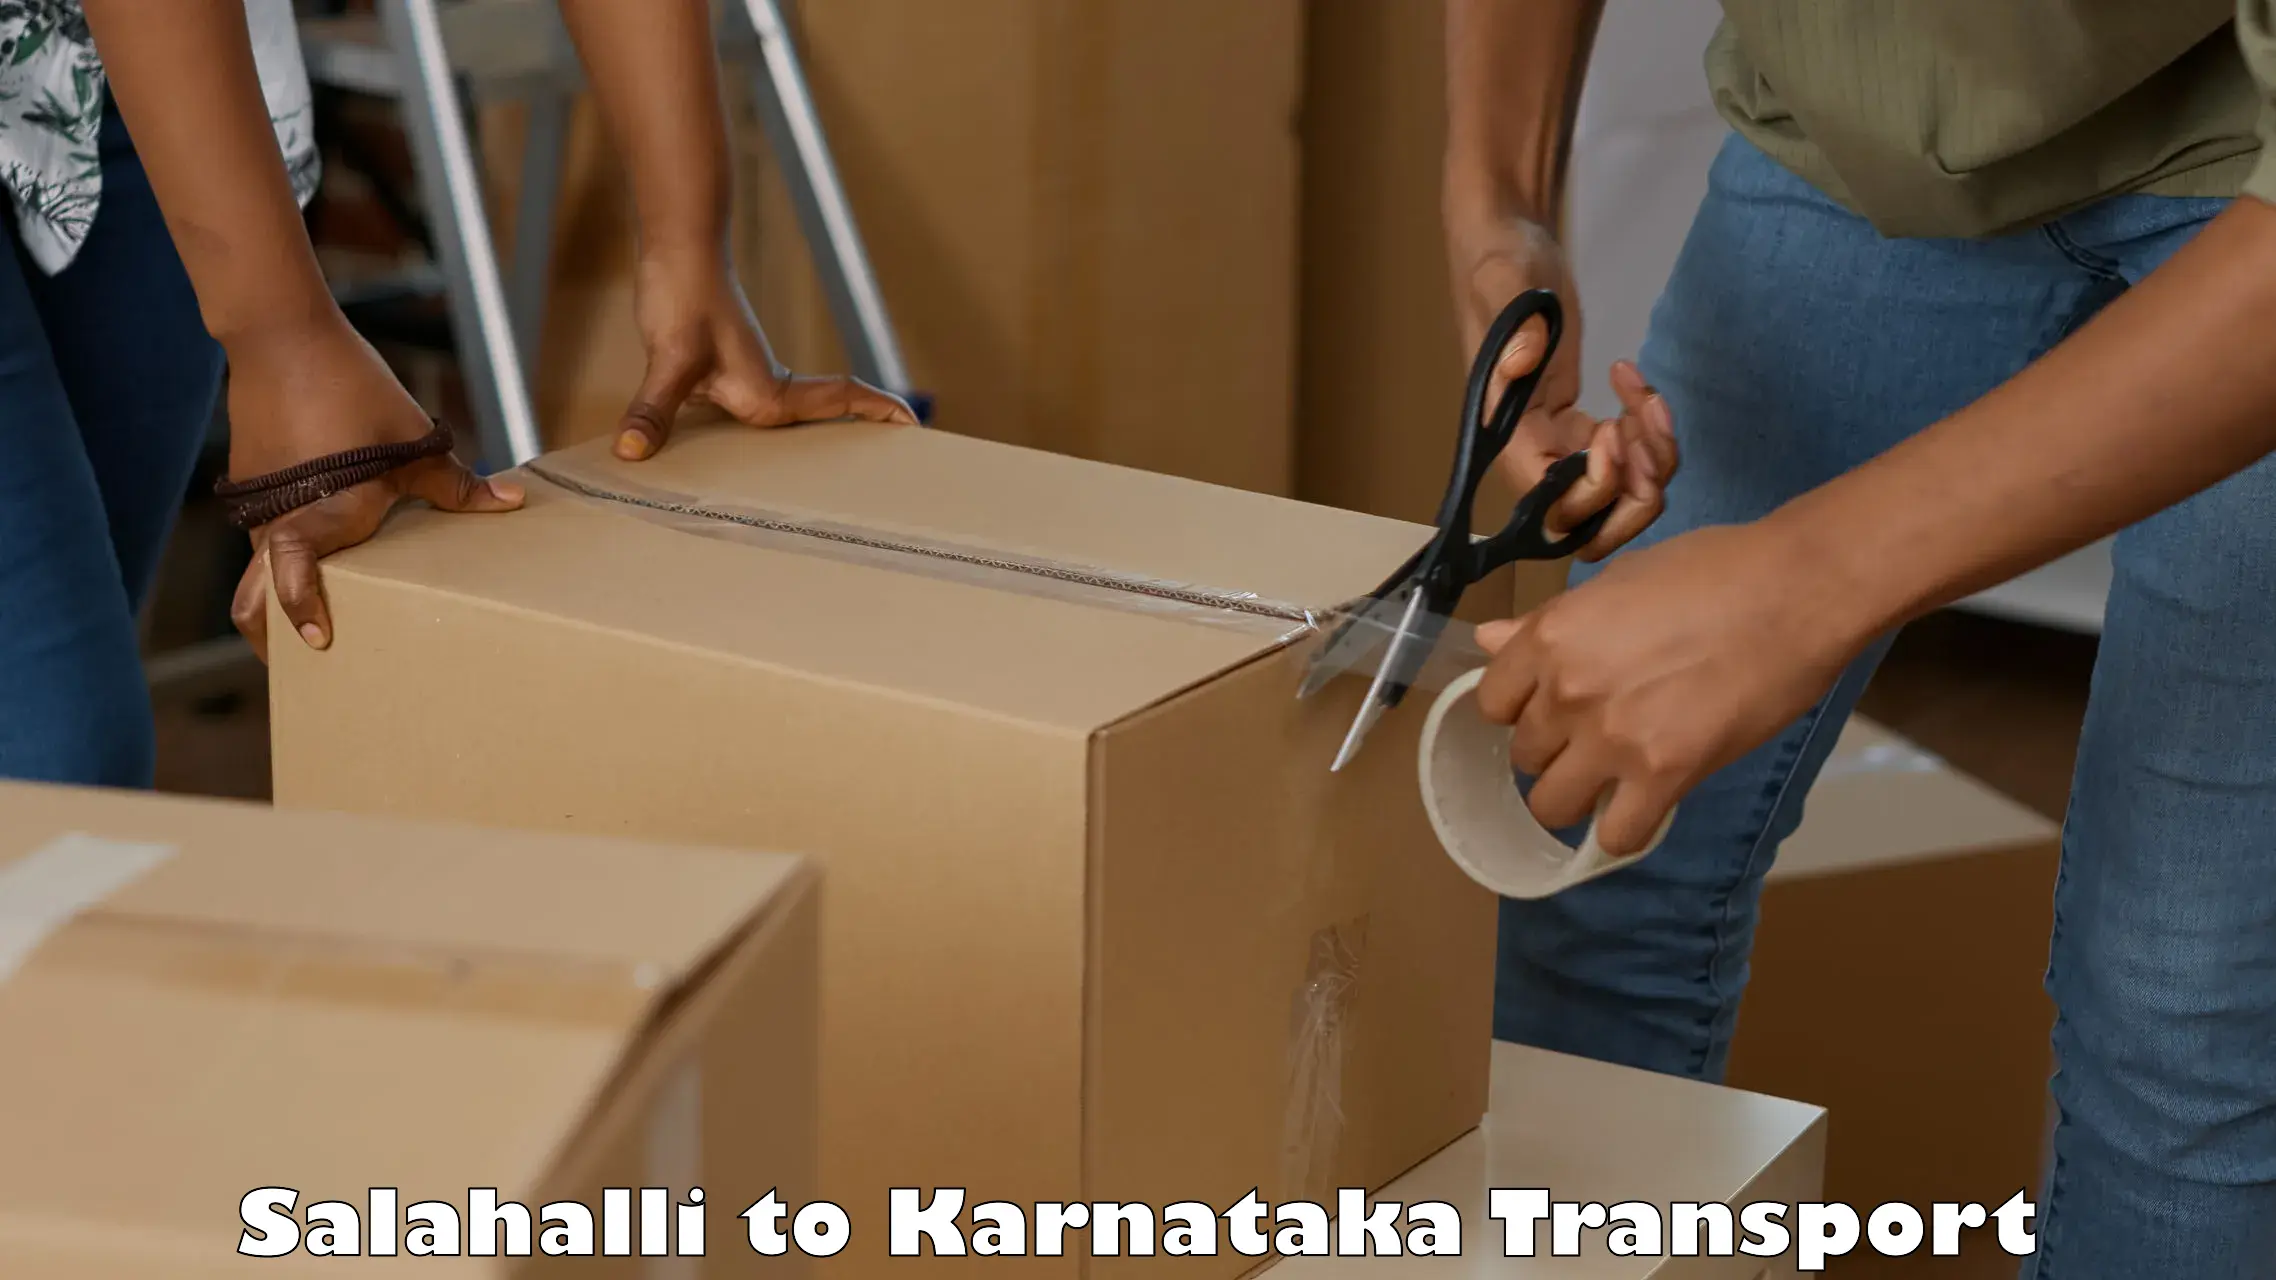 Goods delivery service Salahalli to Karnataka